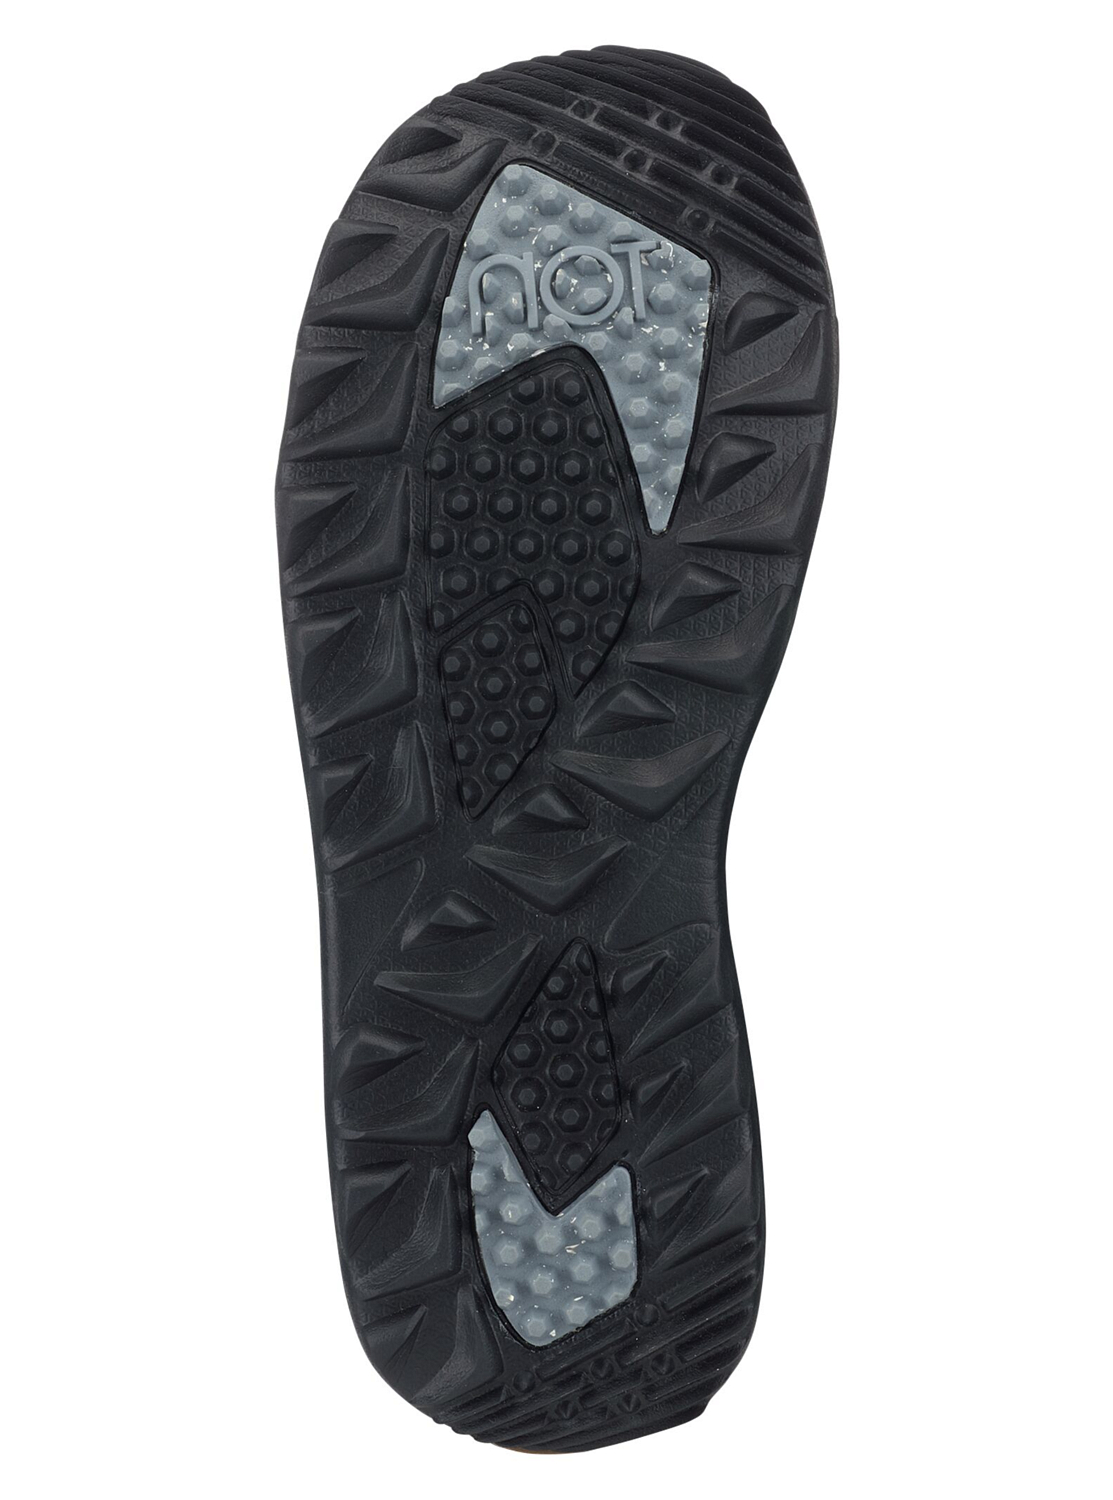 Ботинки для сноуборда BURTON 2020-21 Felix Boa Black